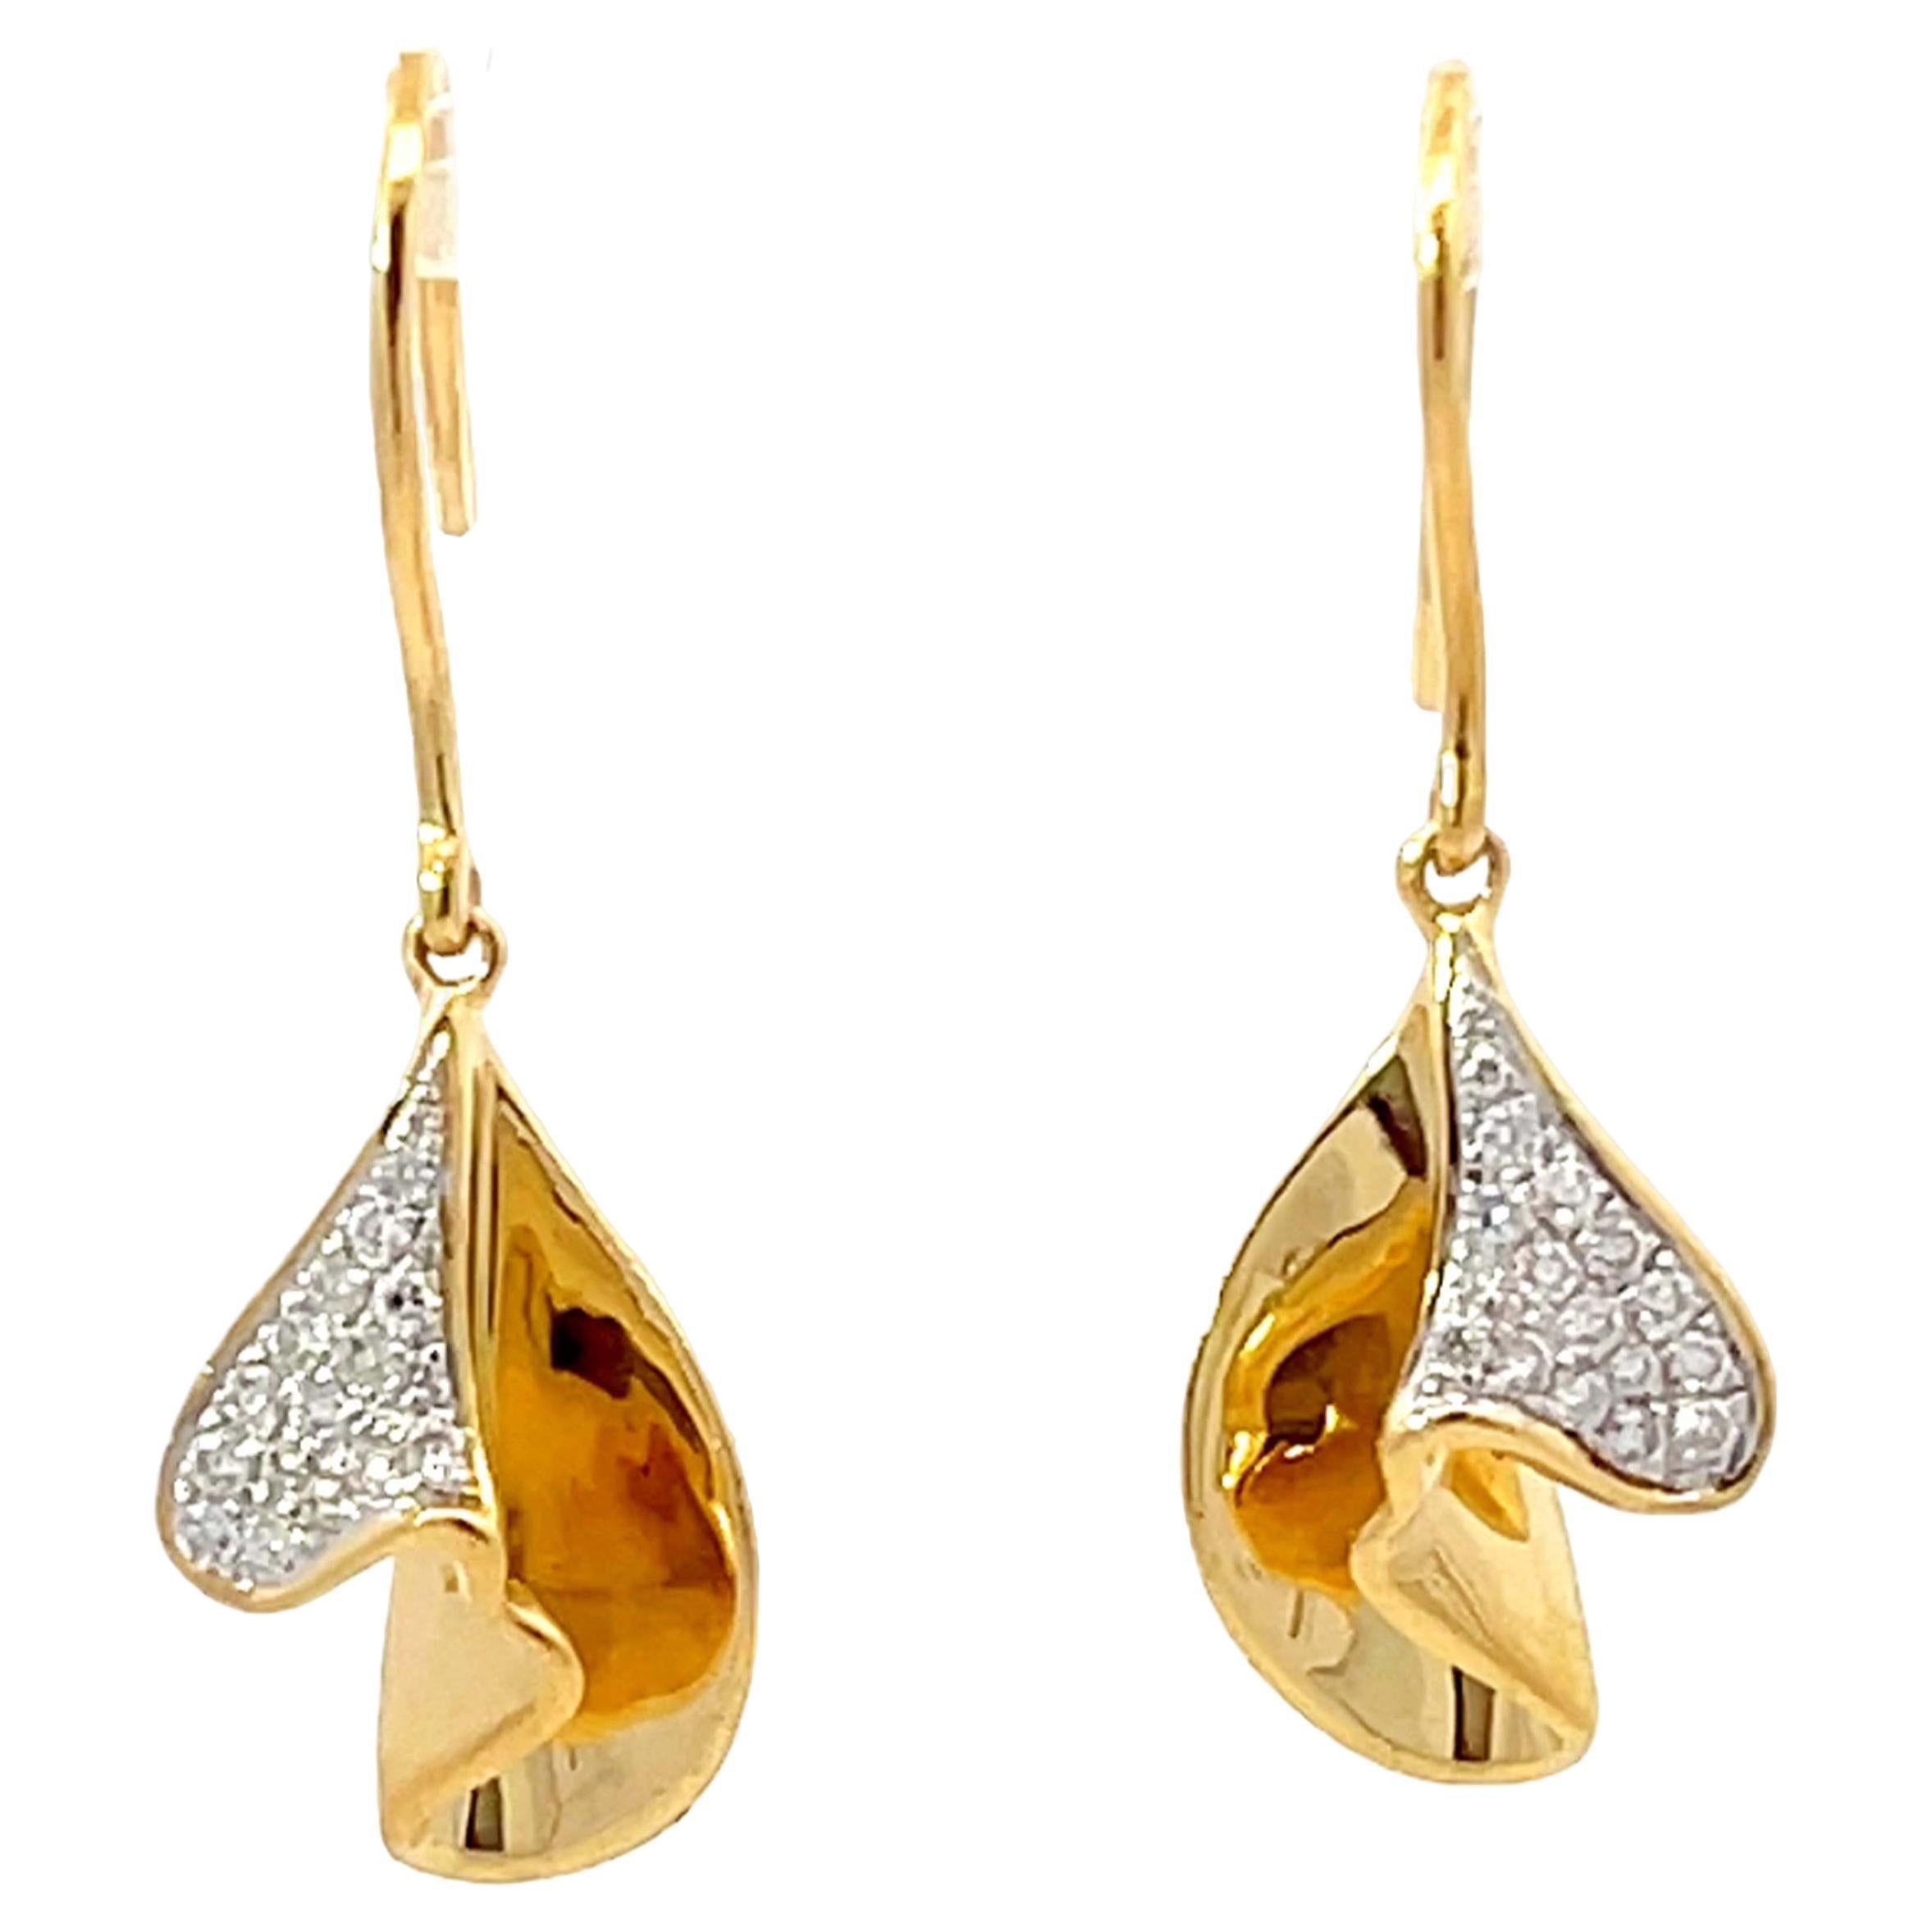 Dangly Gold Diamond Earrings 18K Yellow Gold